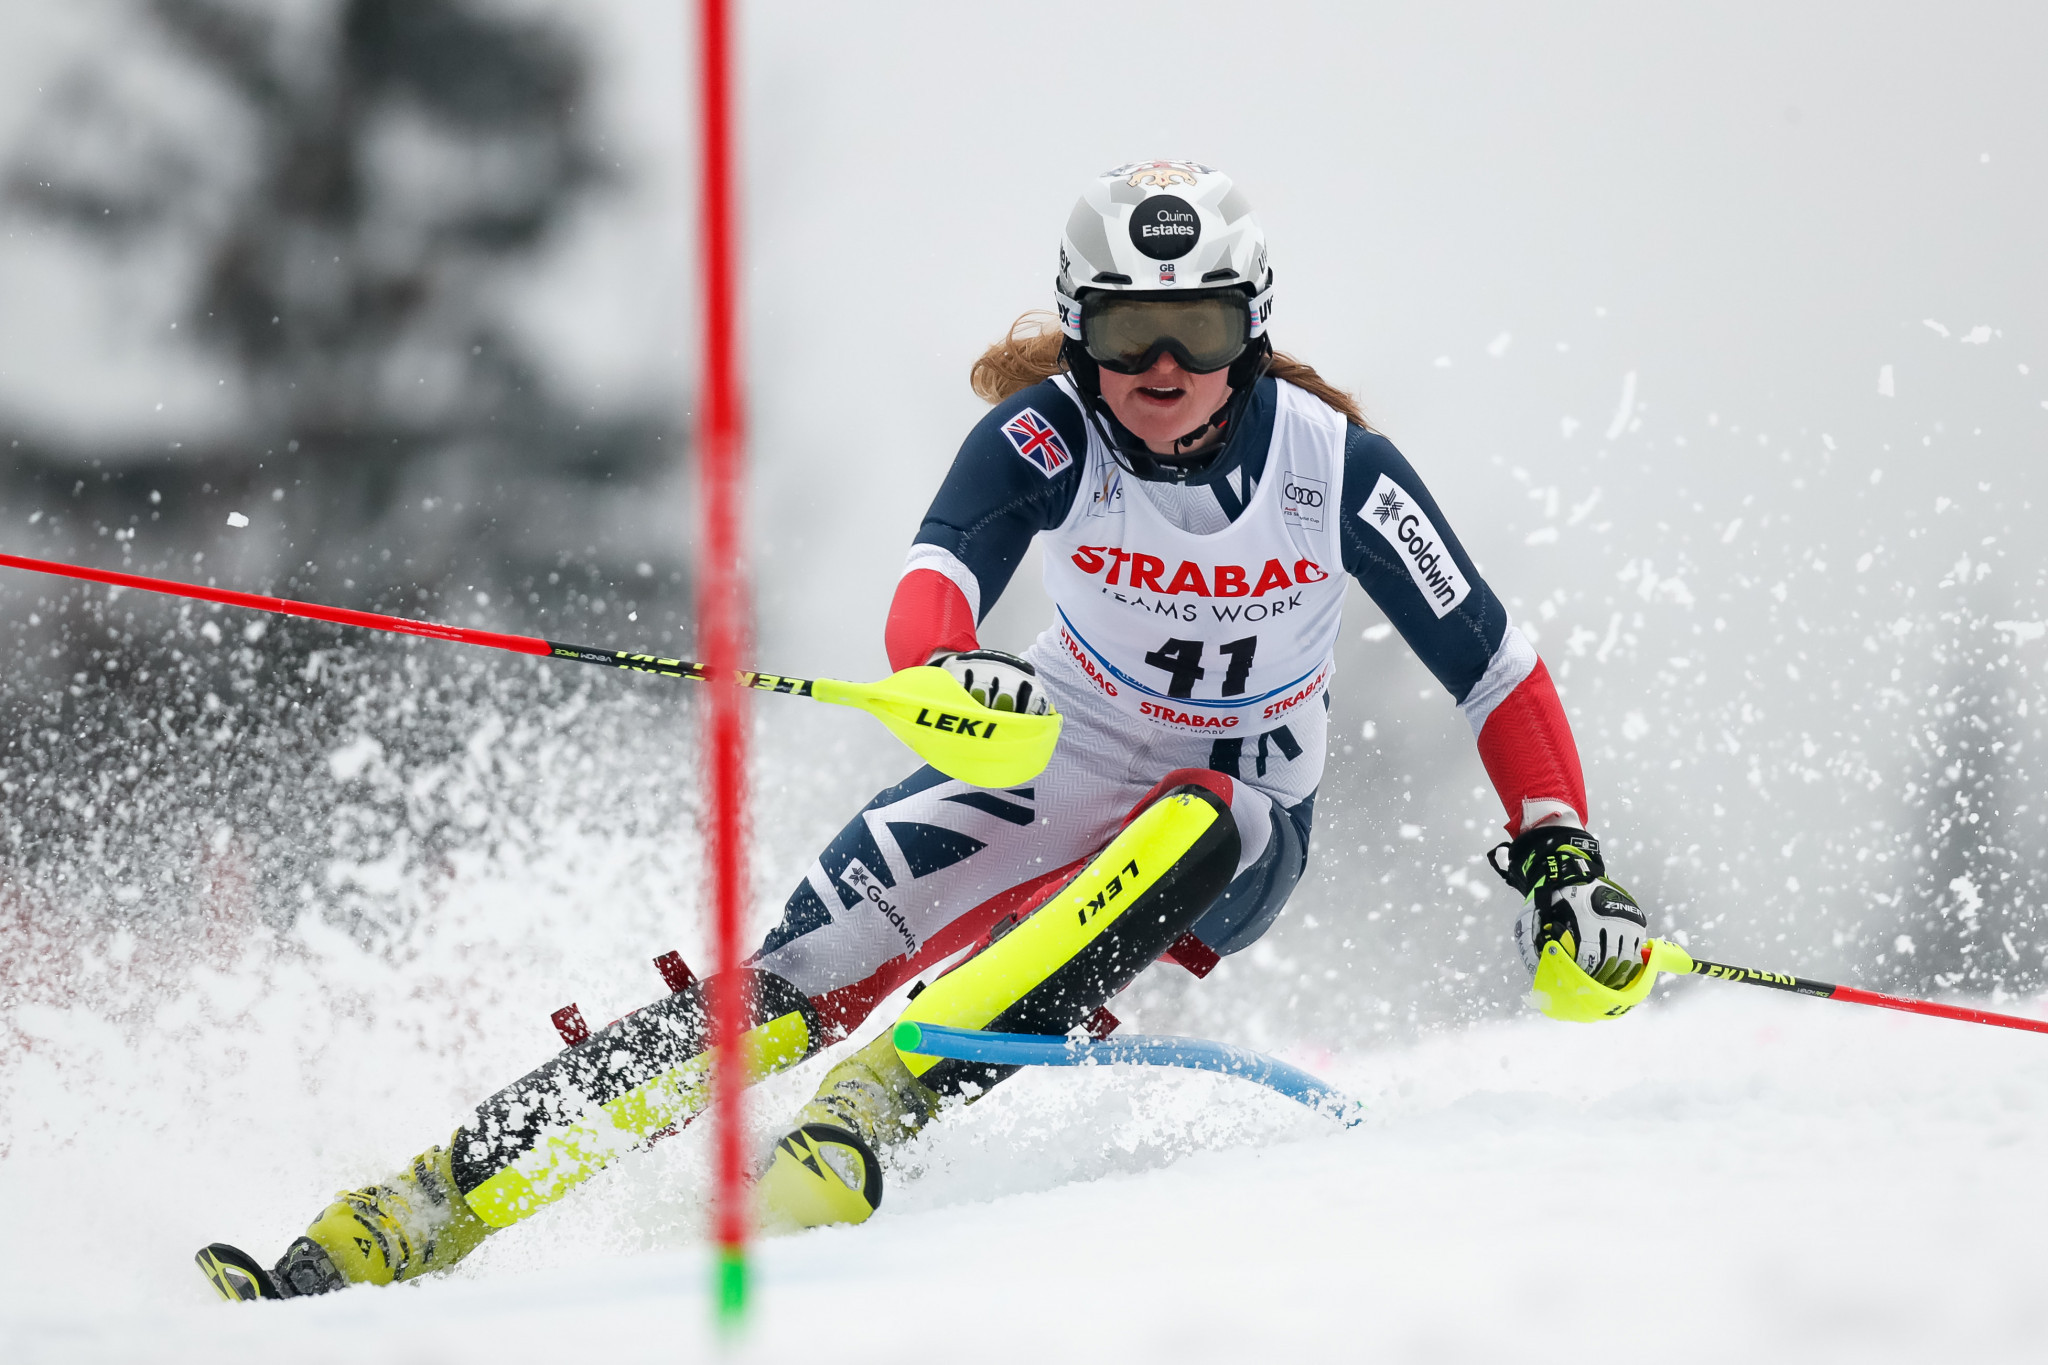 Britain select three athletes for FIS Alpine Ski World Cup squad